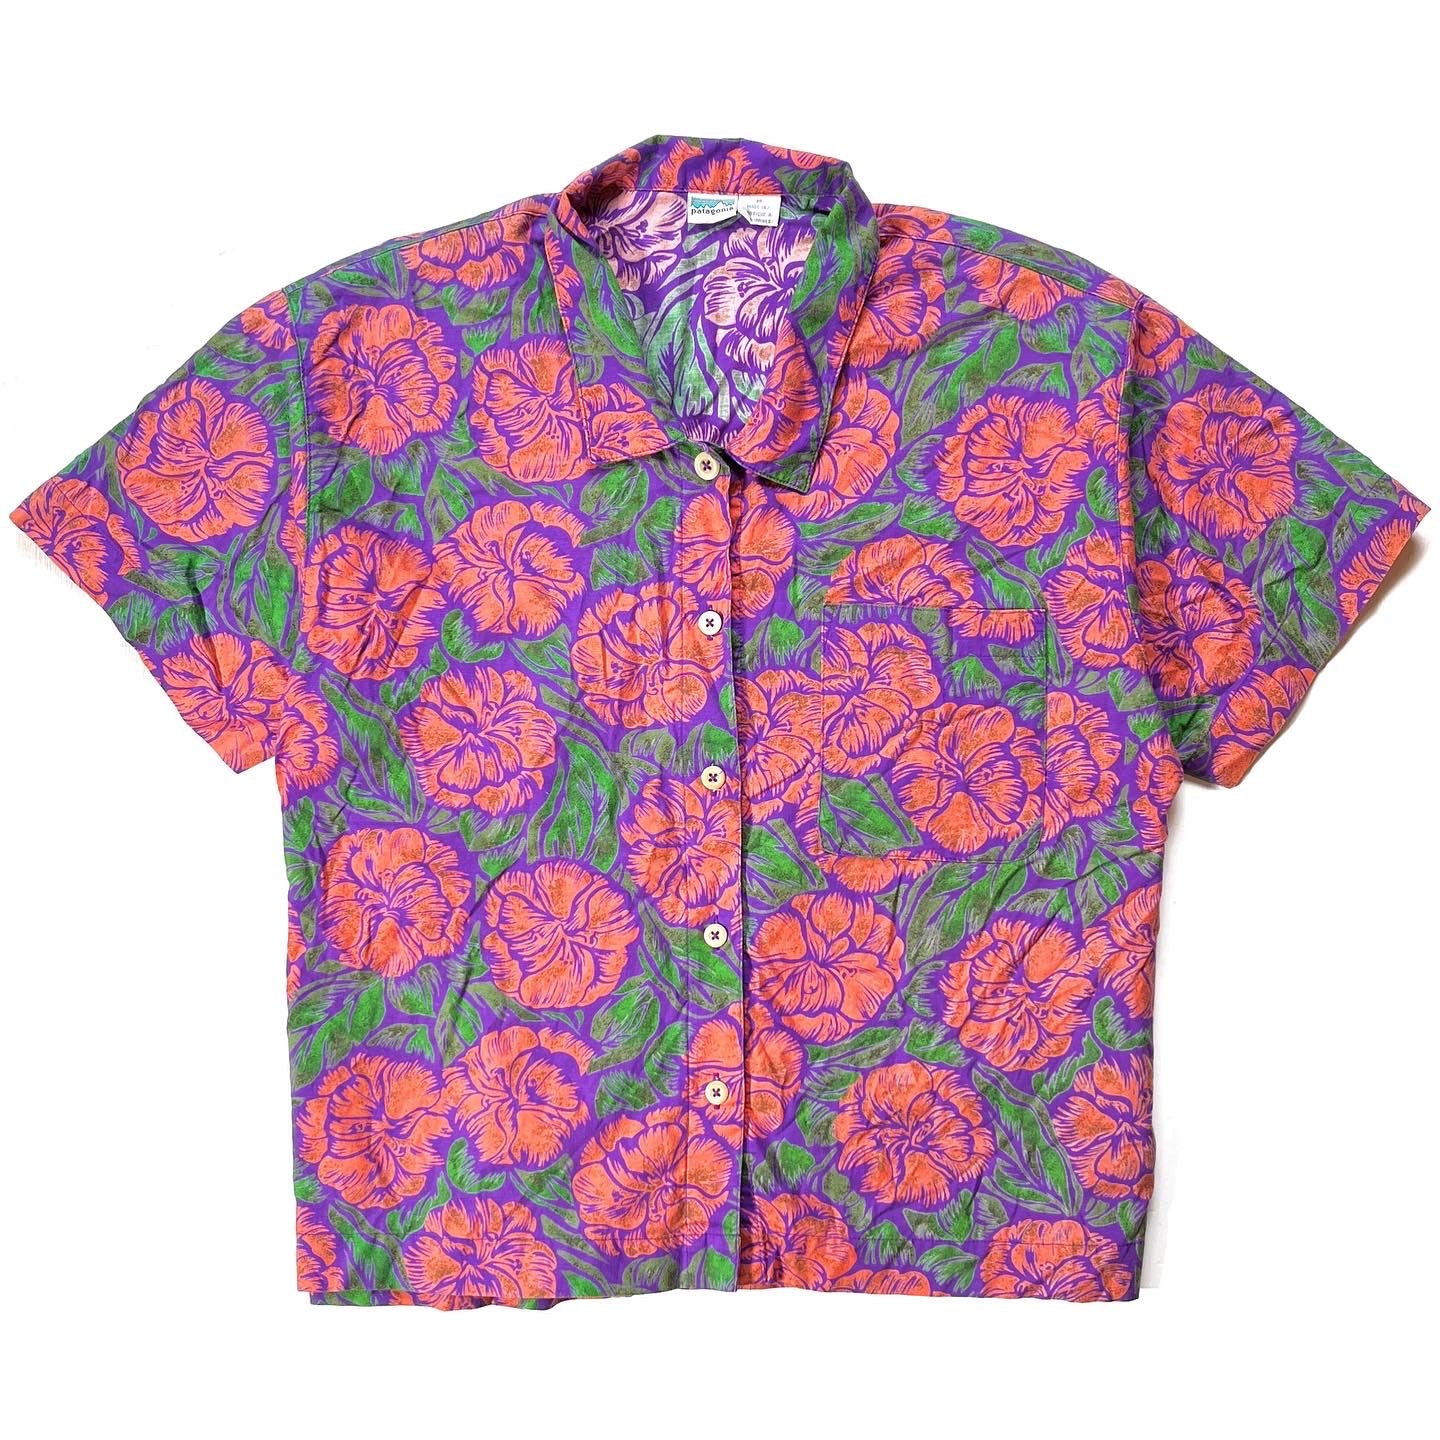 1991 Patagonia Womens Cotton A/C Print Shirt, Floral Print (M-L)